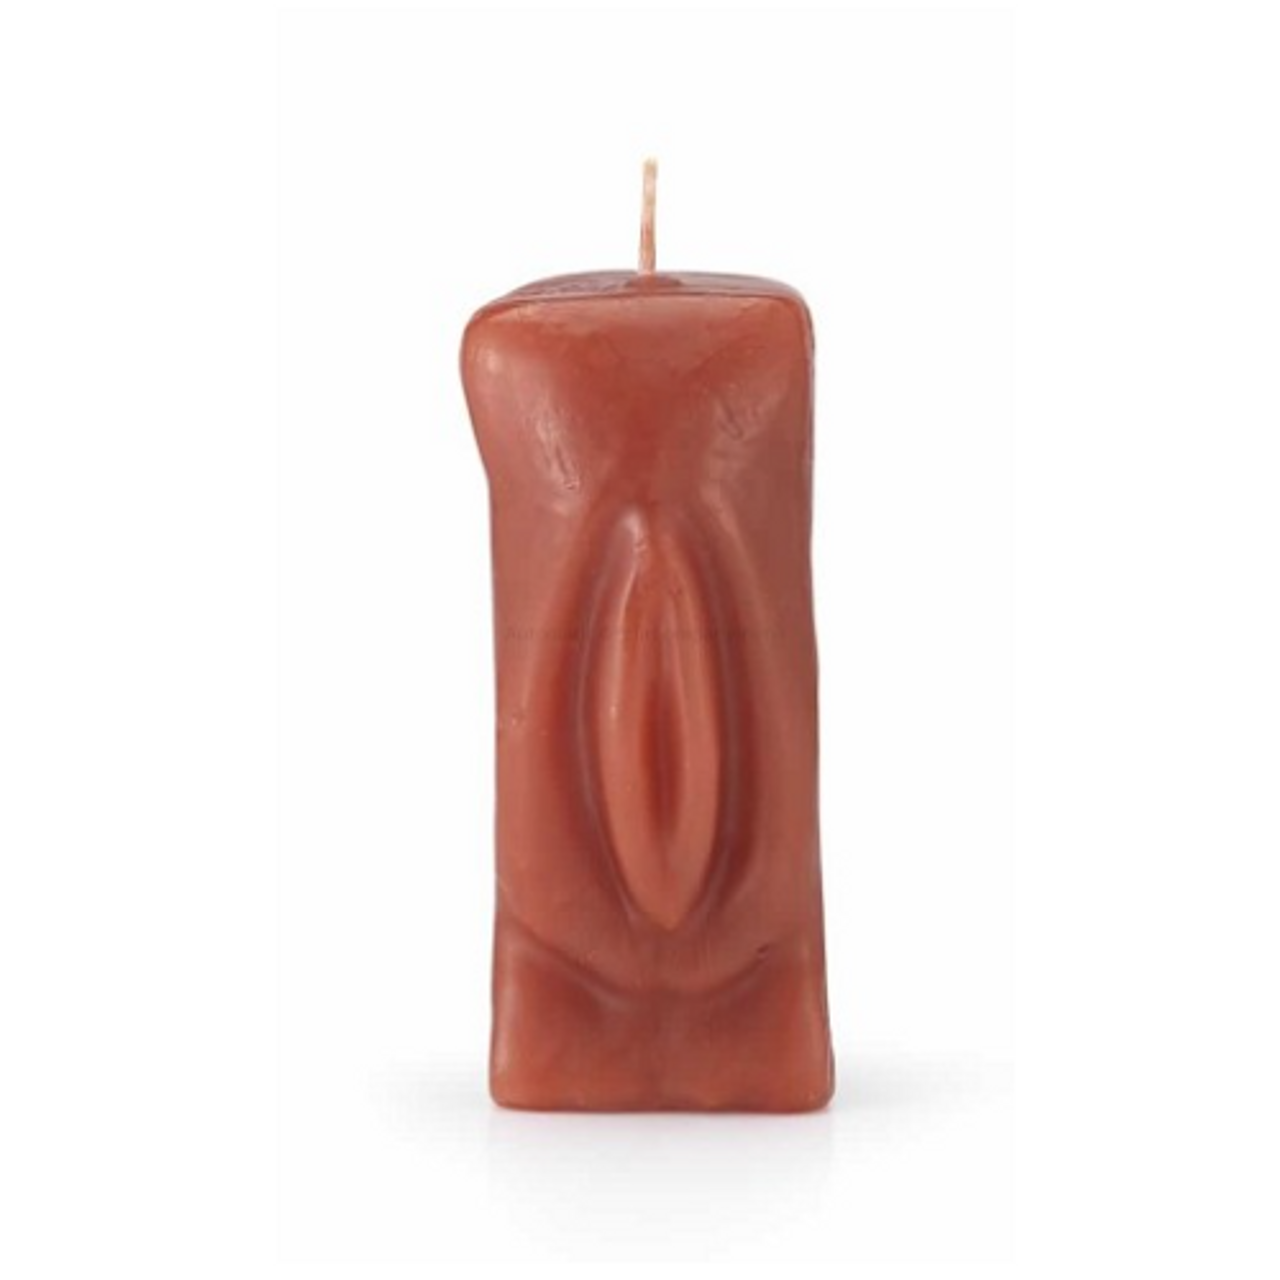 Candle Female Genital Vagina Figure 5" - Select Type